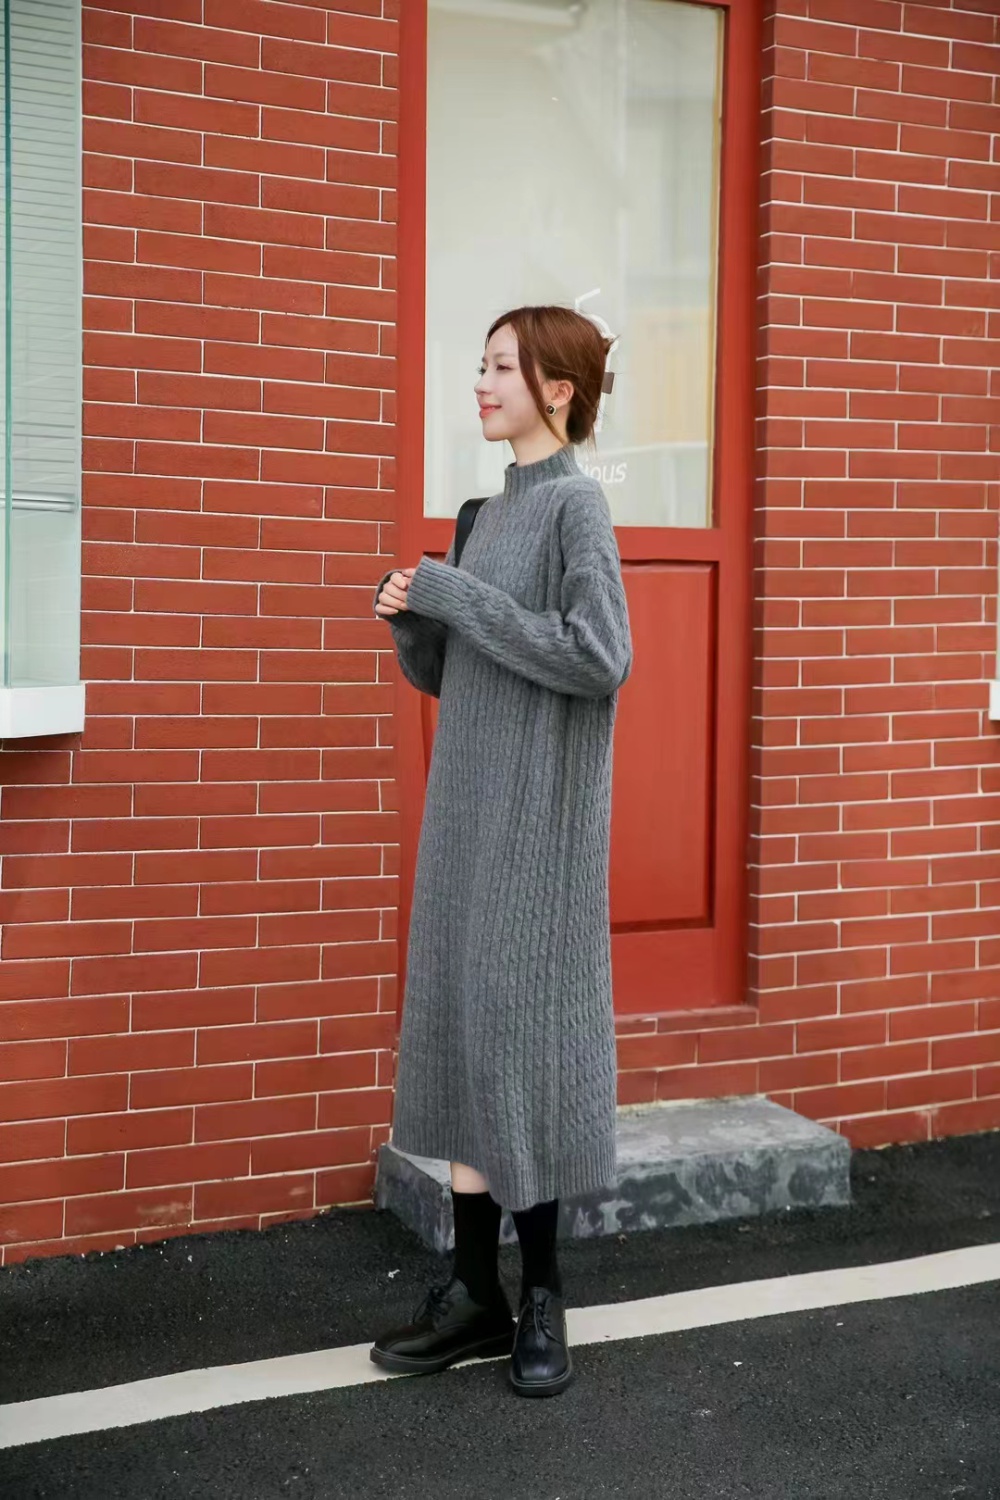 Long high collar sweater loose dress for women